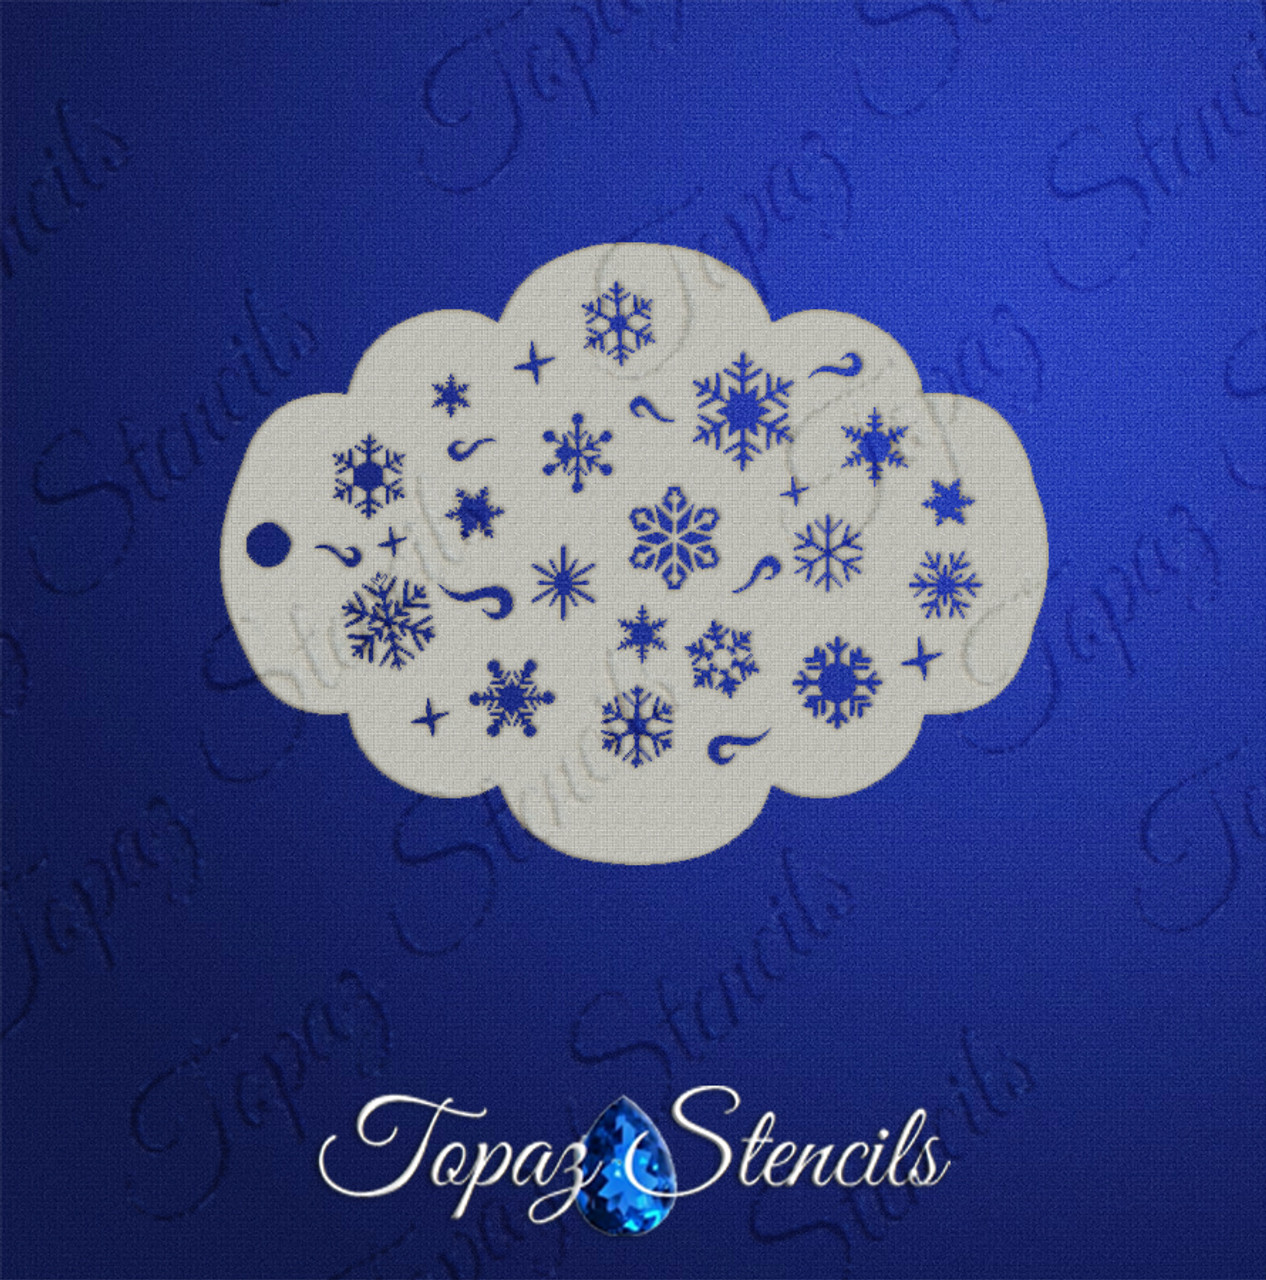 Snowstorm - Topaz Stencils